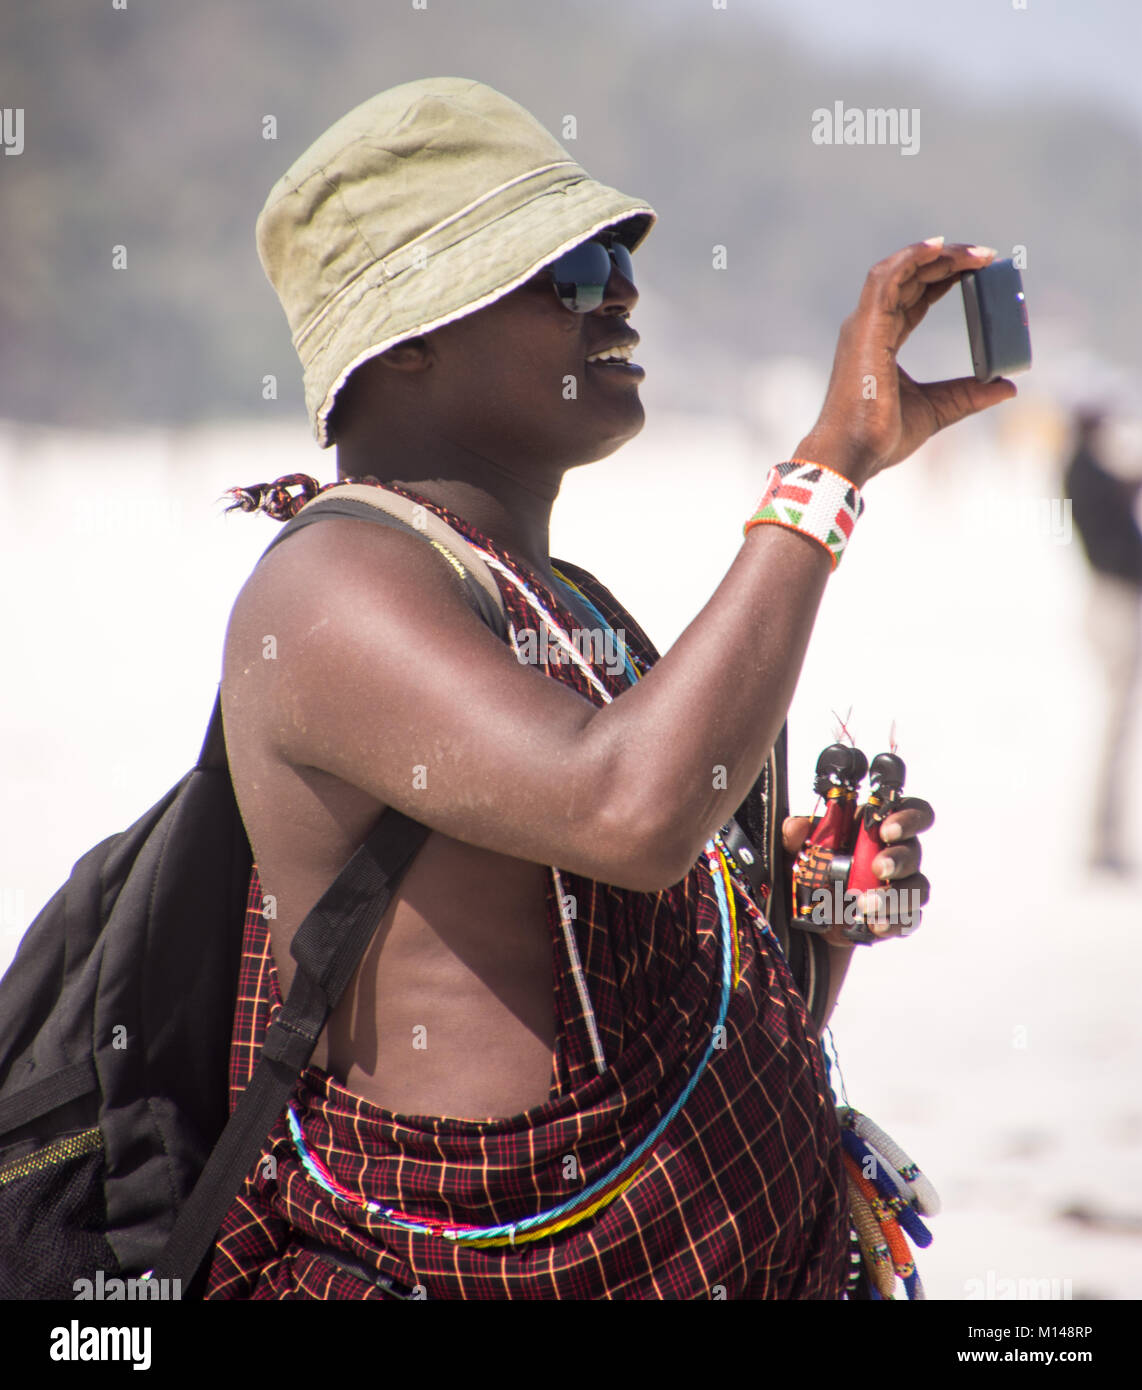 Masai Moran am Strand Stockfoto